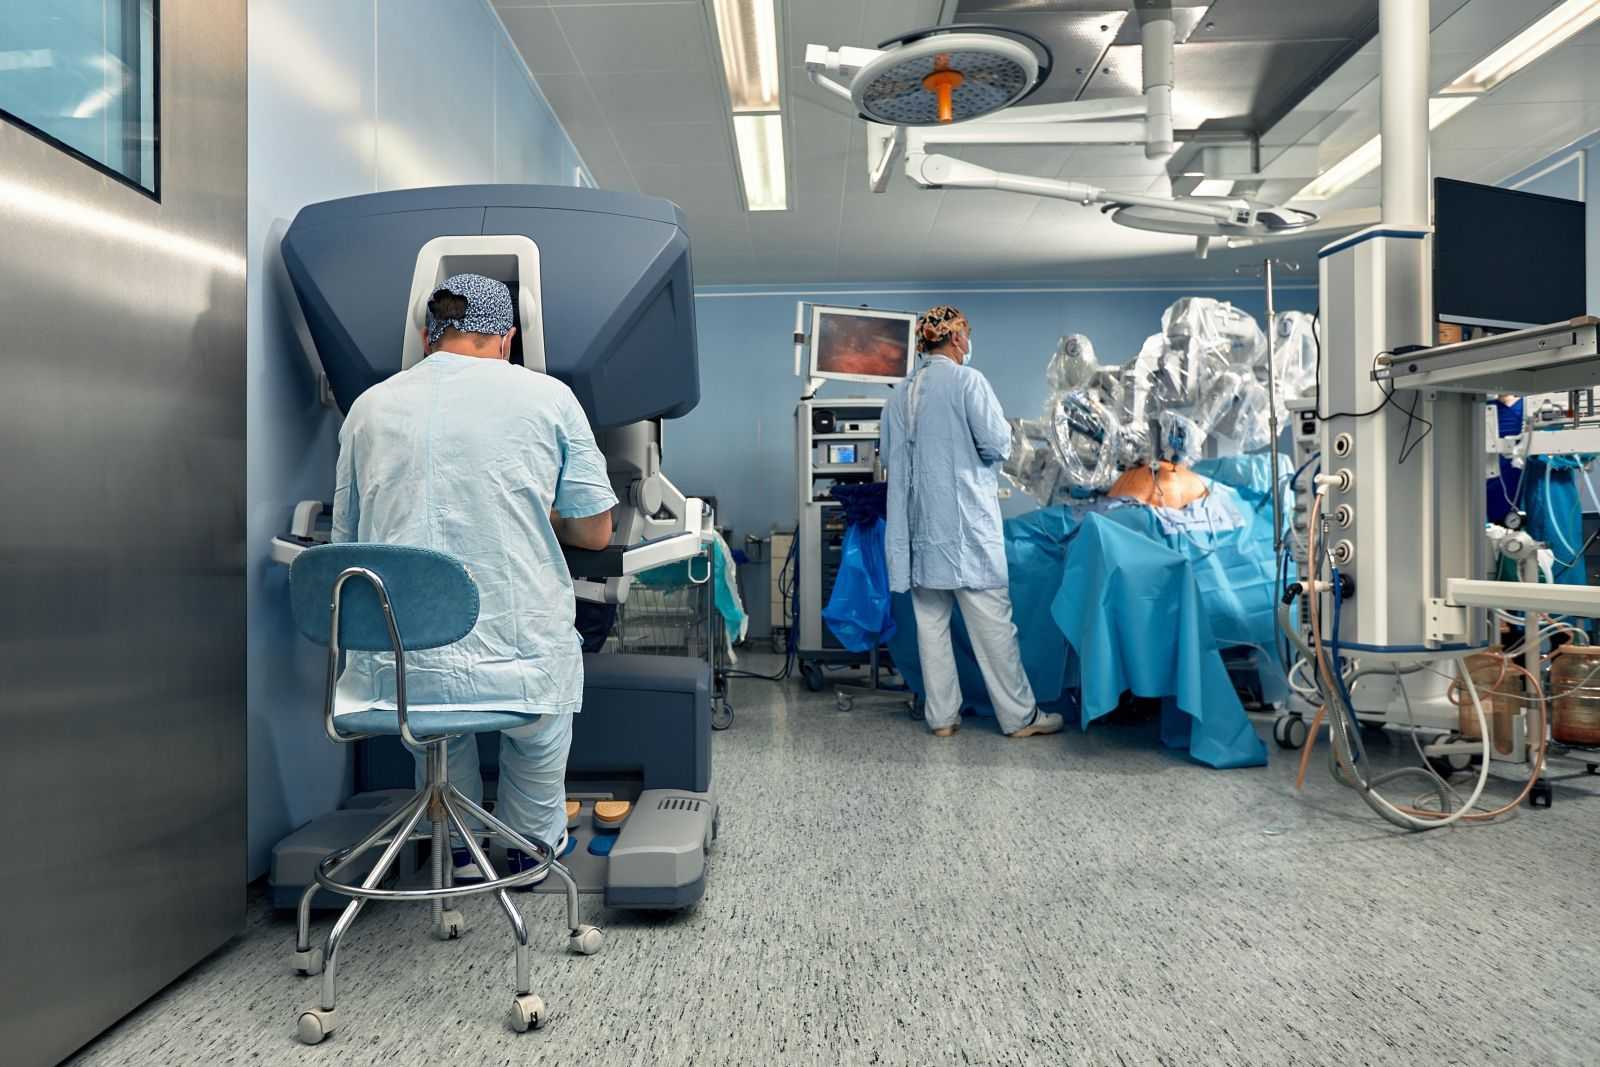 Surgeon using Da Vinci robotic system in operating theatre